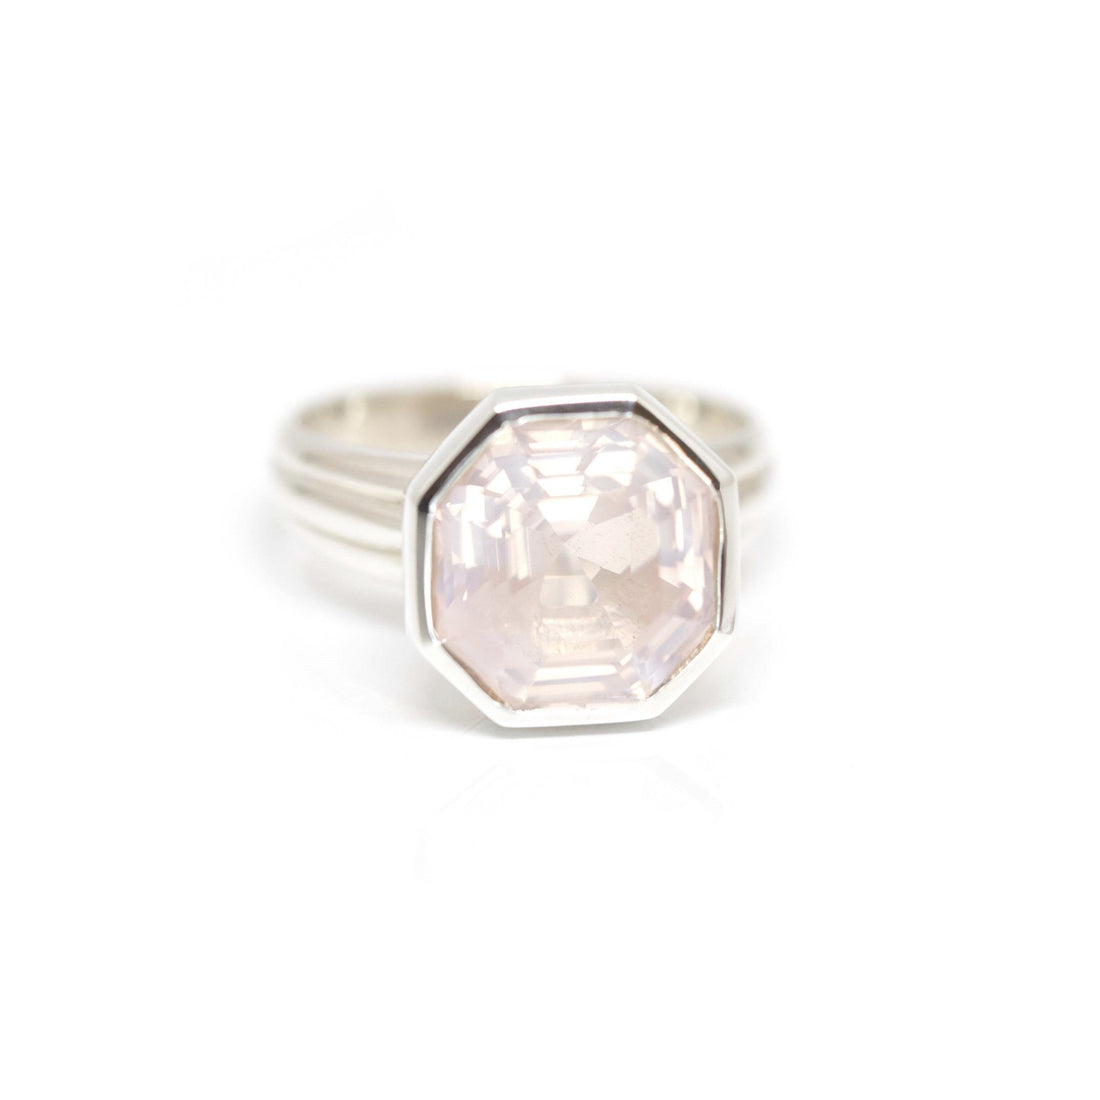 bena jewelry rose quartz statement ring made in montreal